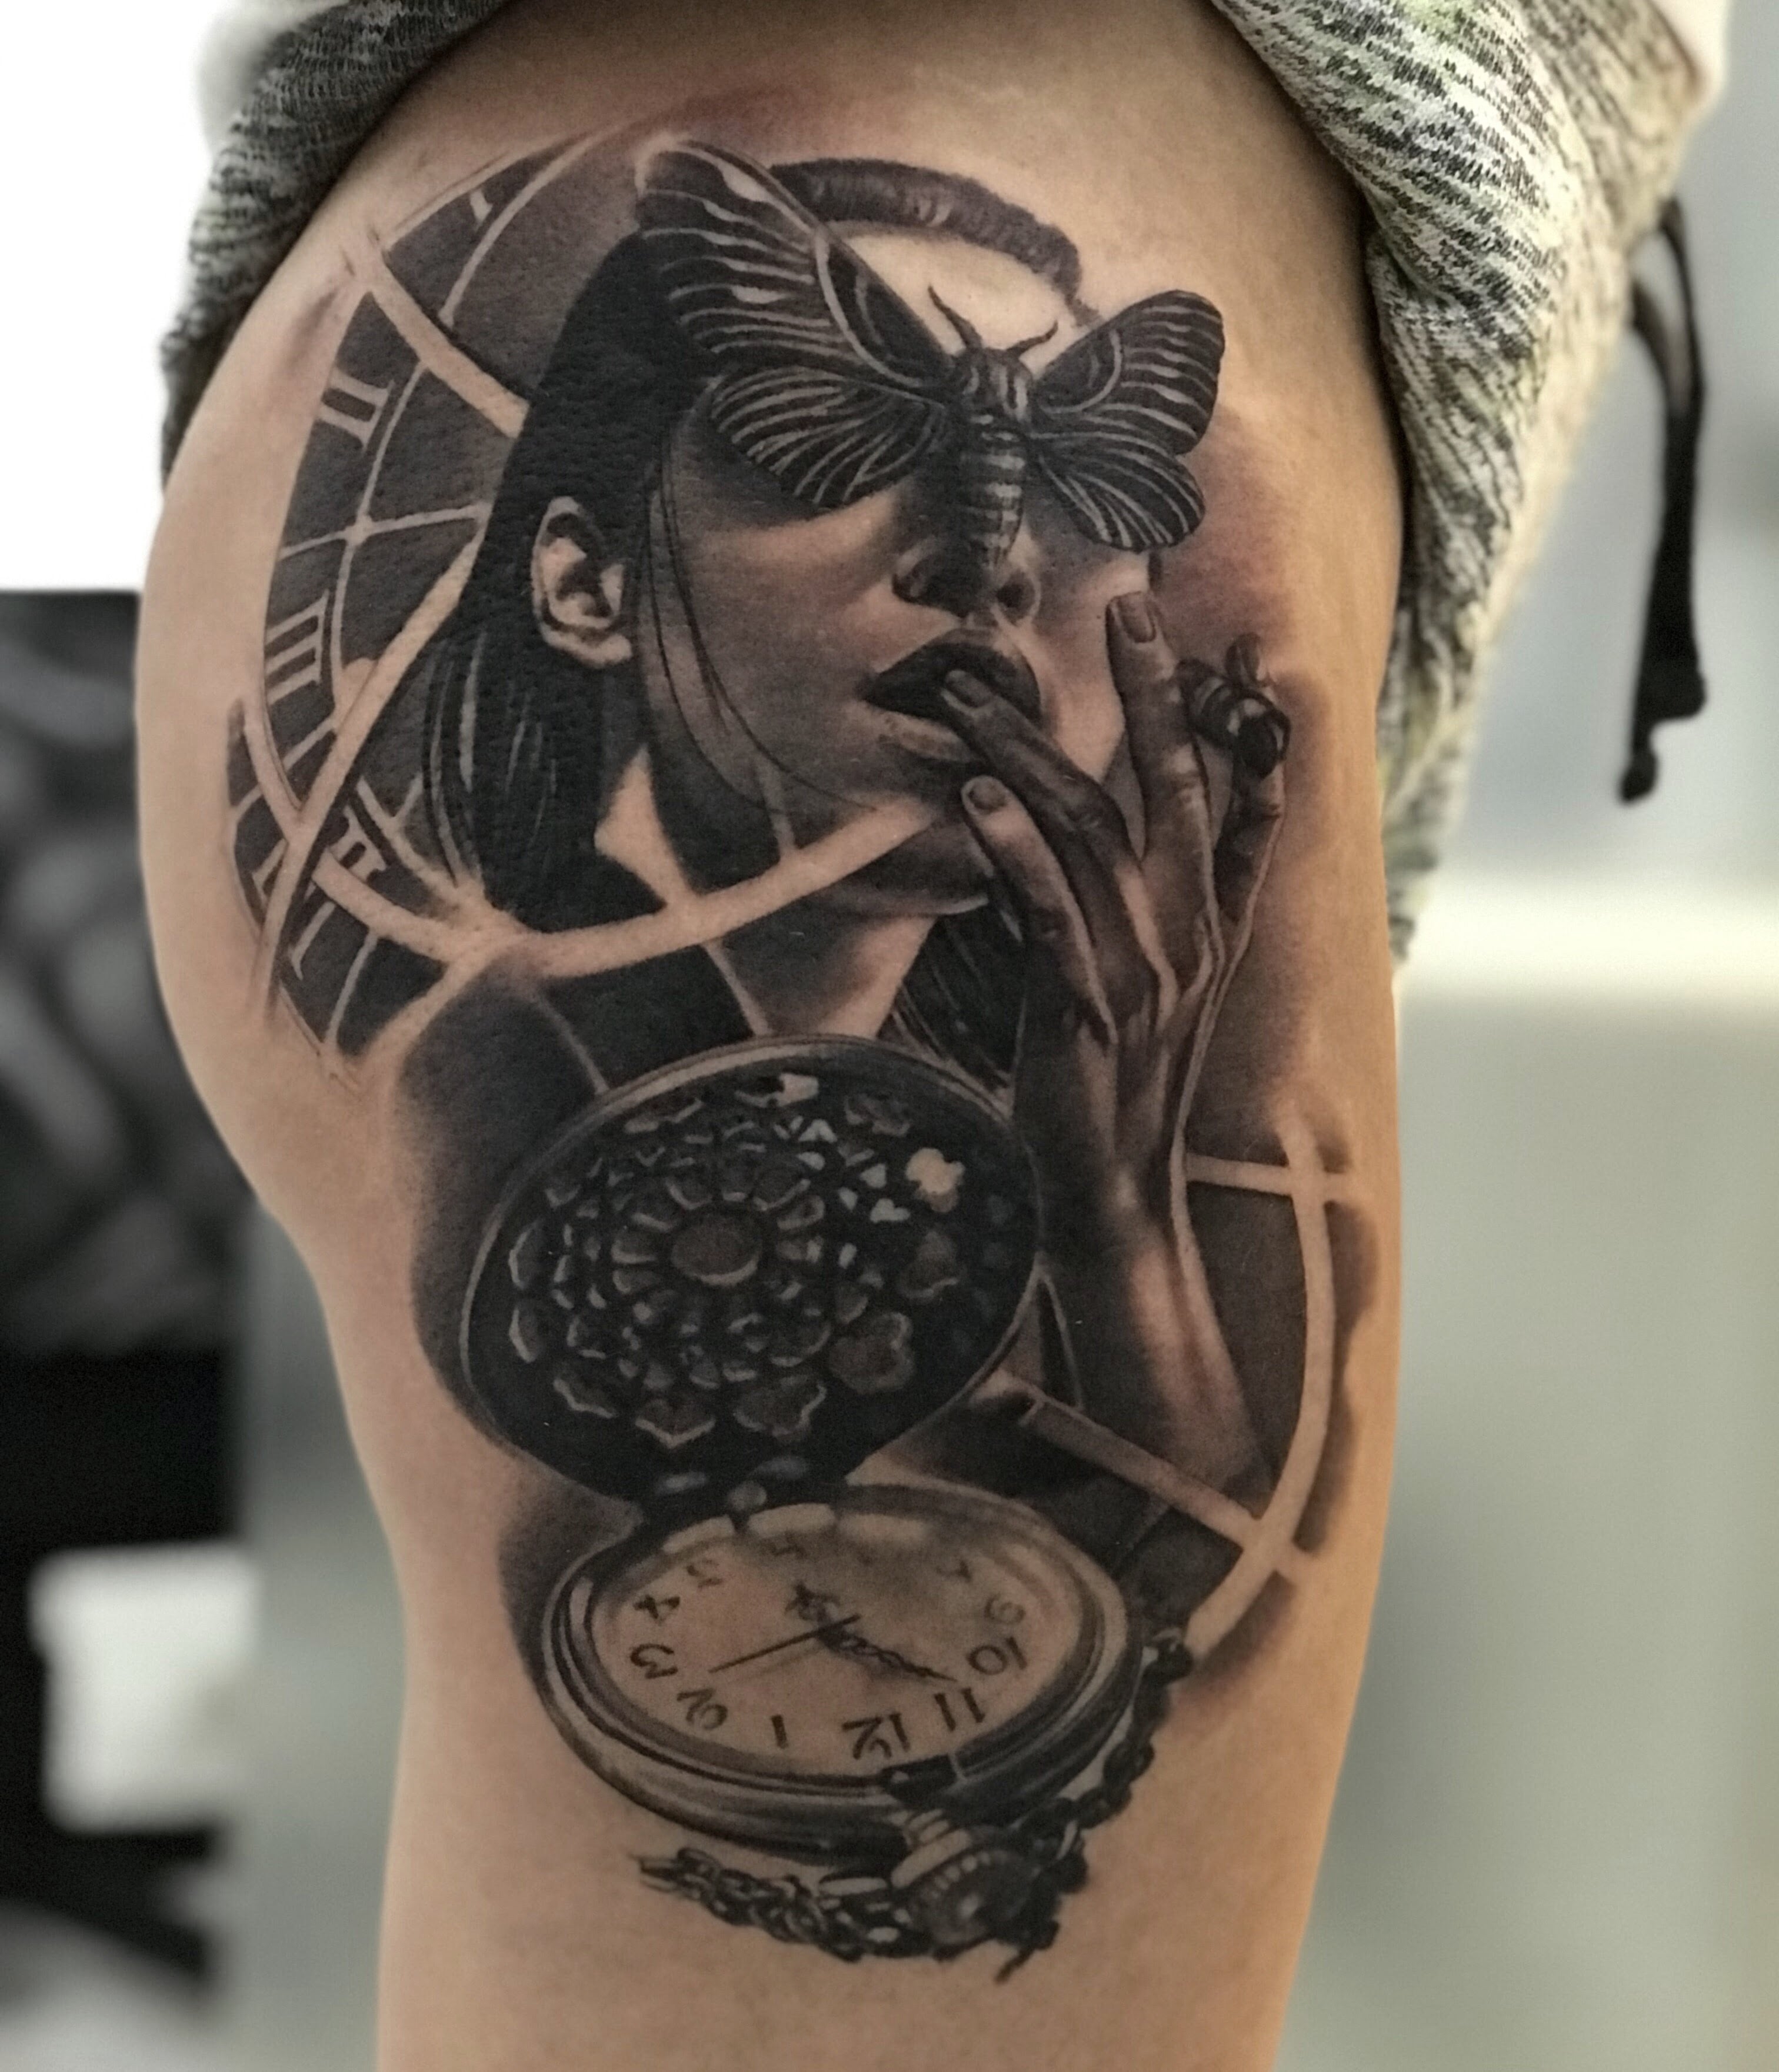 Girl And Clock Tattoo